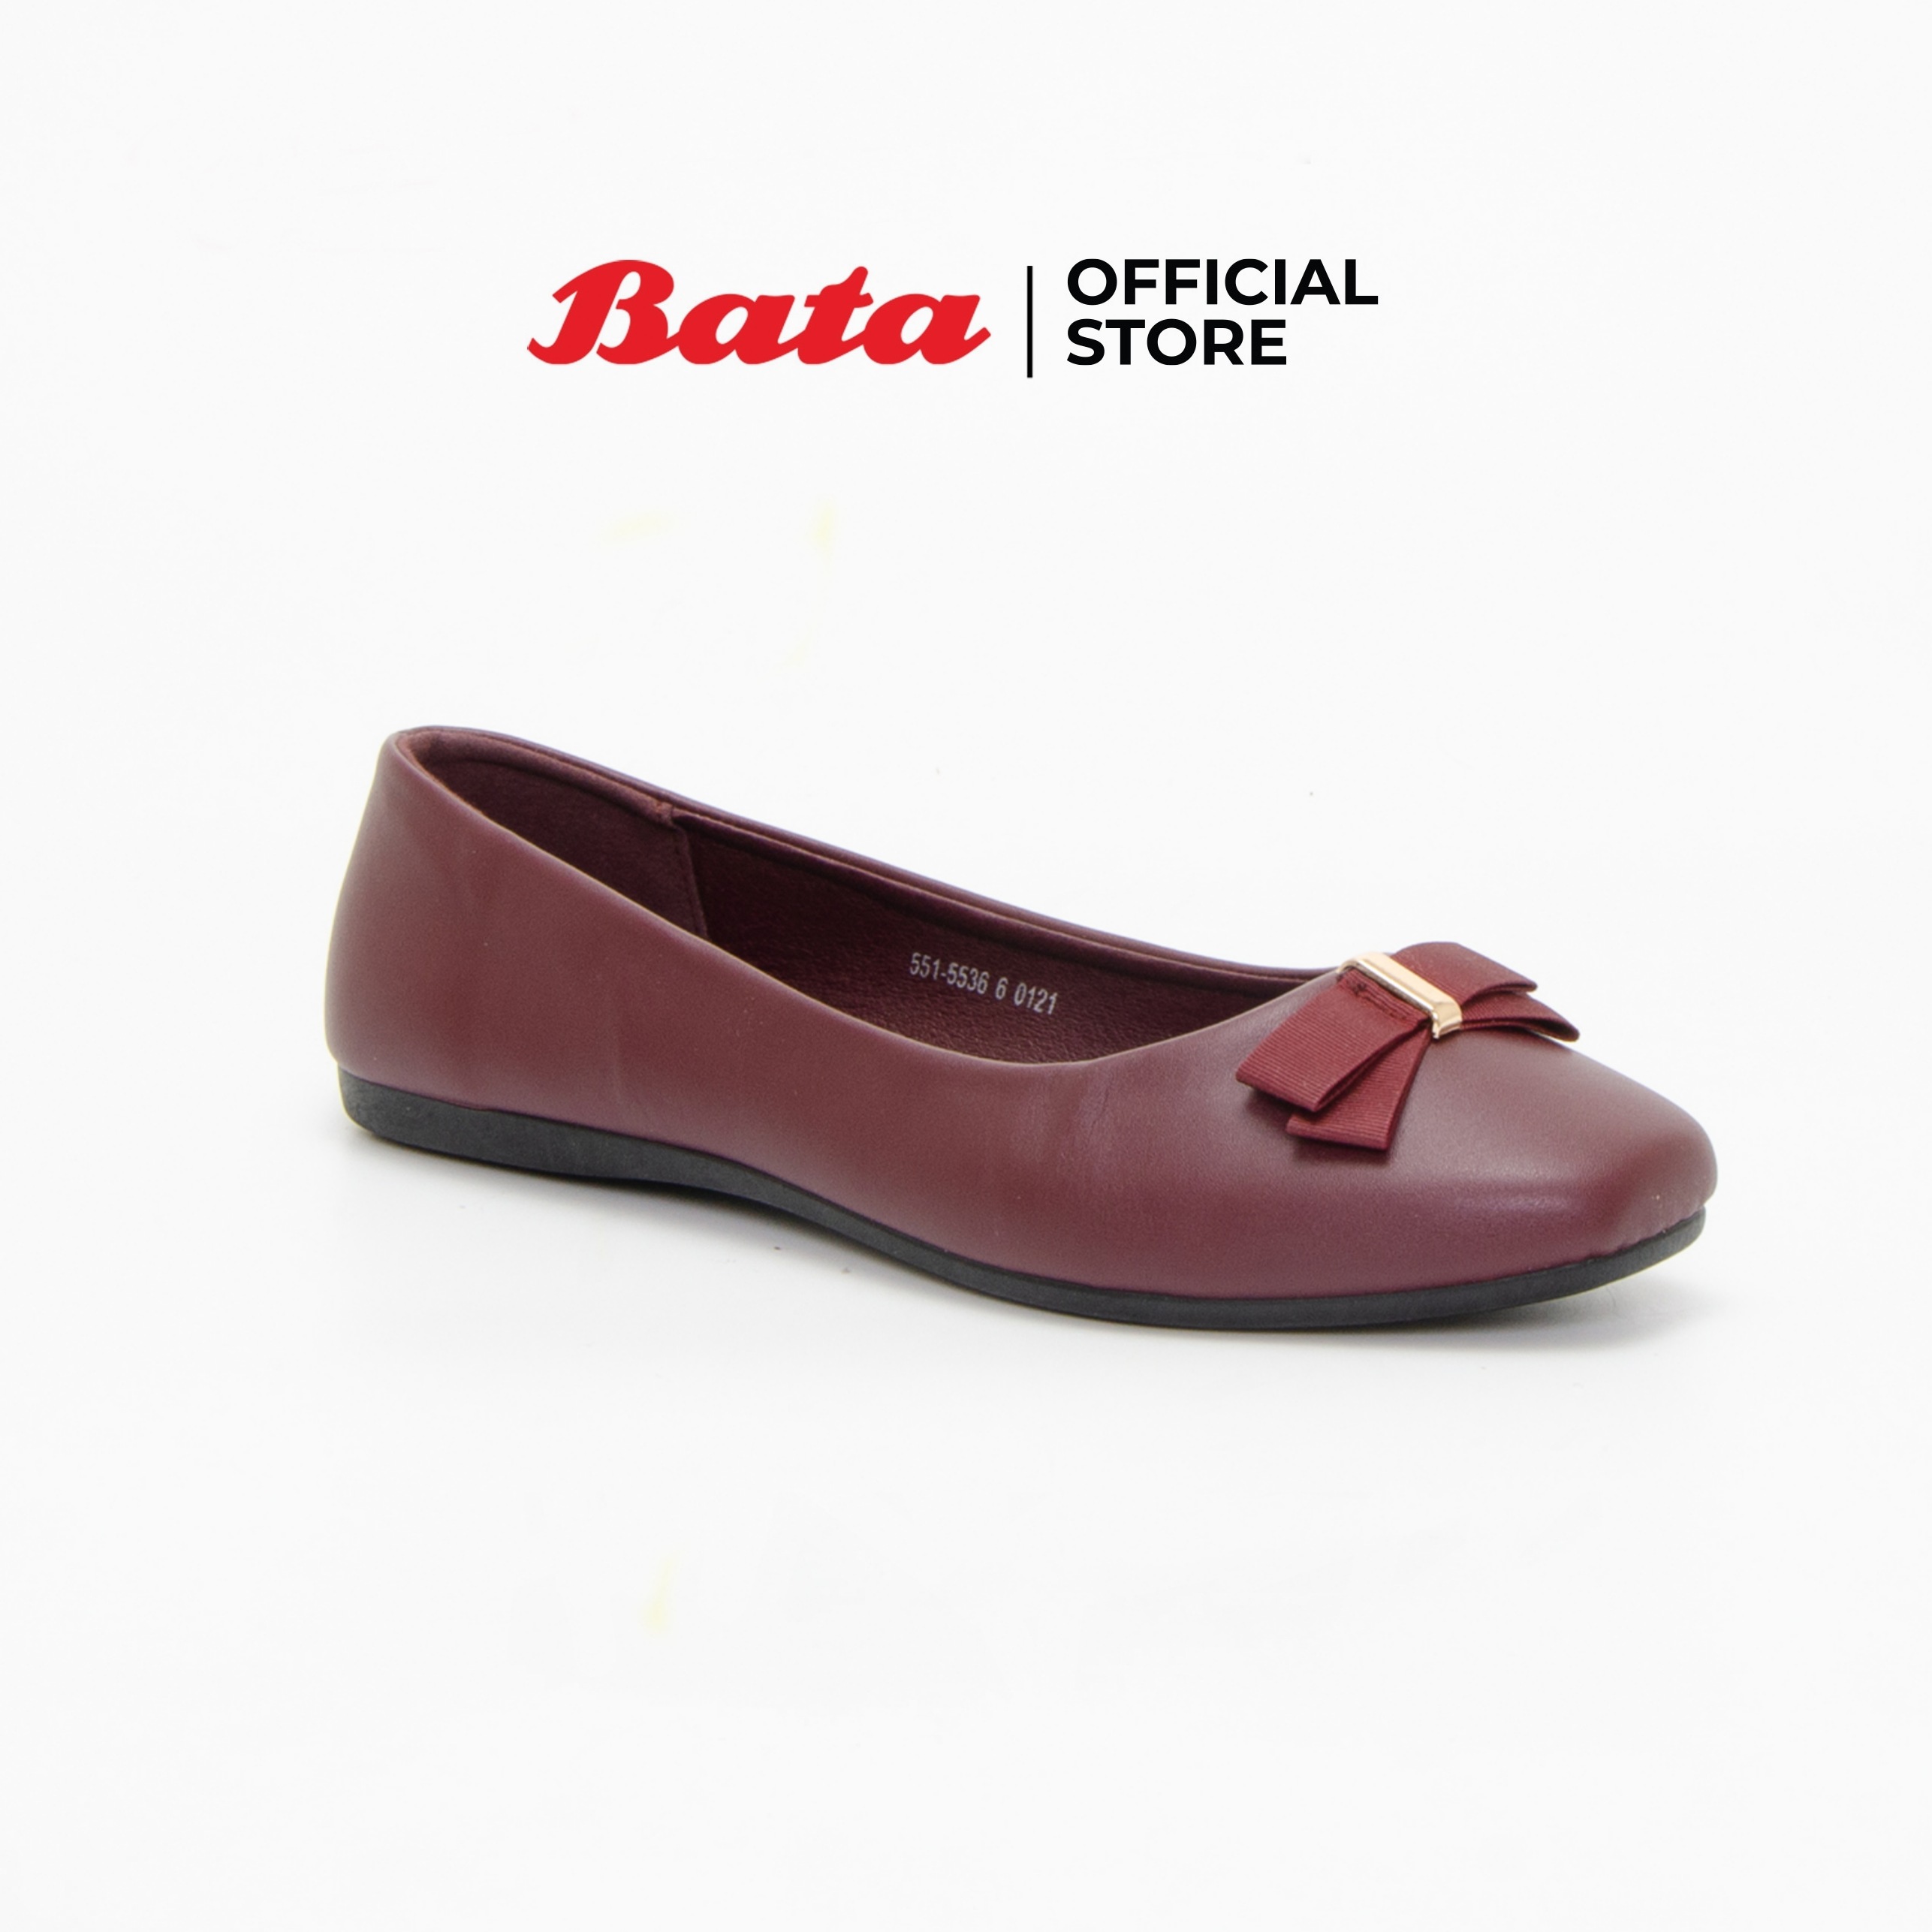 Bata Women's Ballerina Flats รองเท้าบัลเล่ต์แฟลตสำหรับผู้หญิง รุ่น Bindi สีแดง 5515536